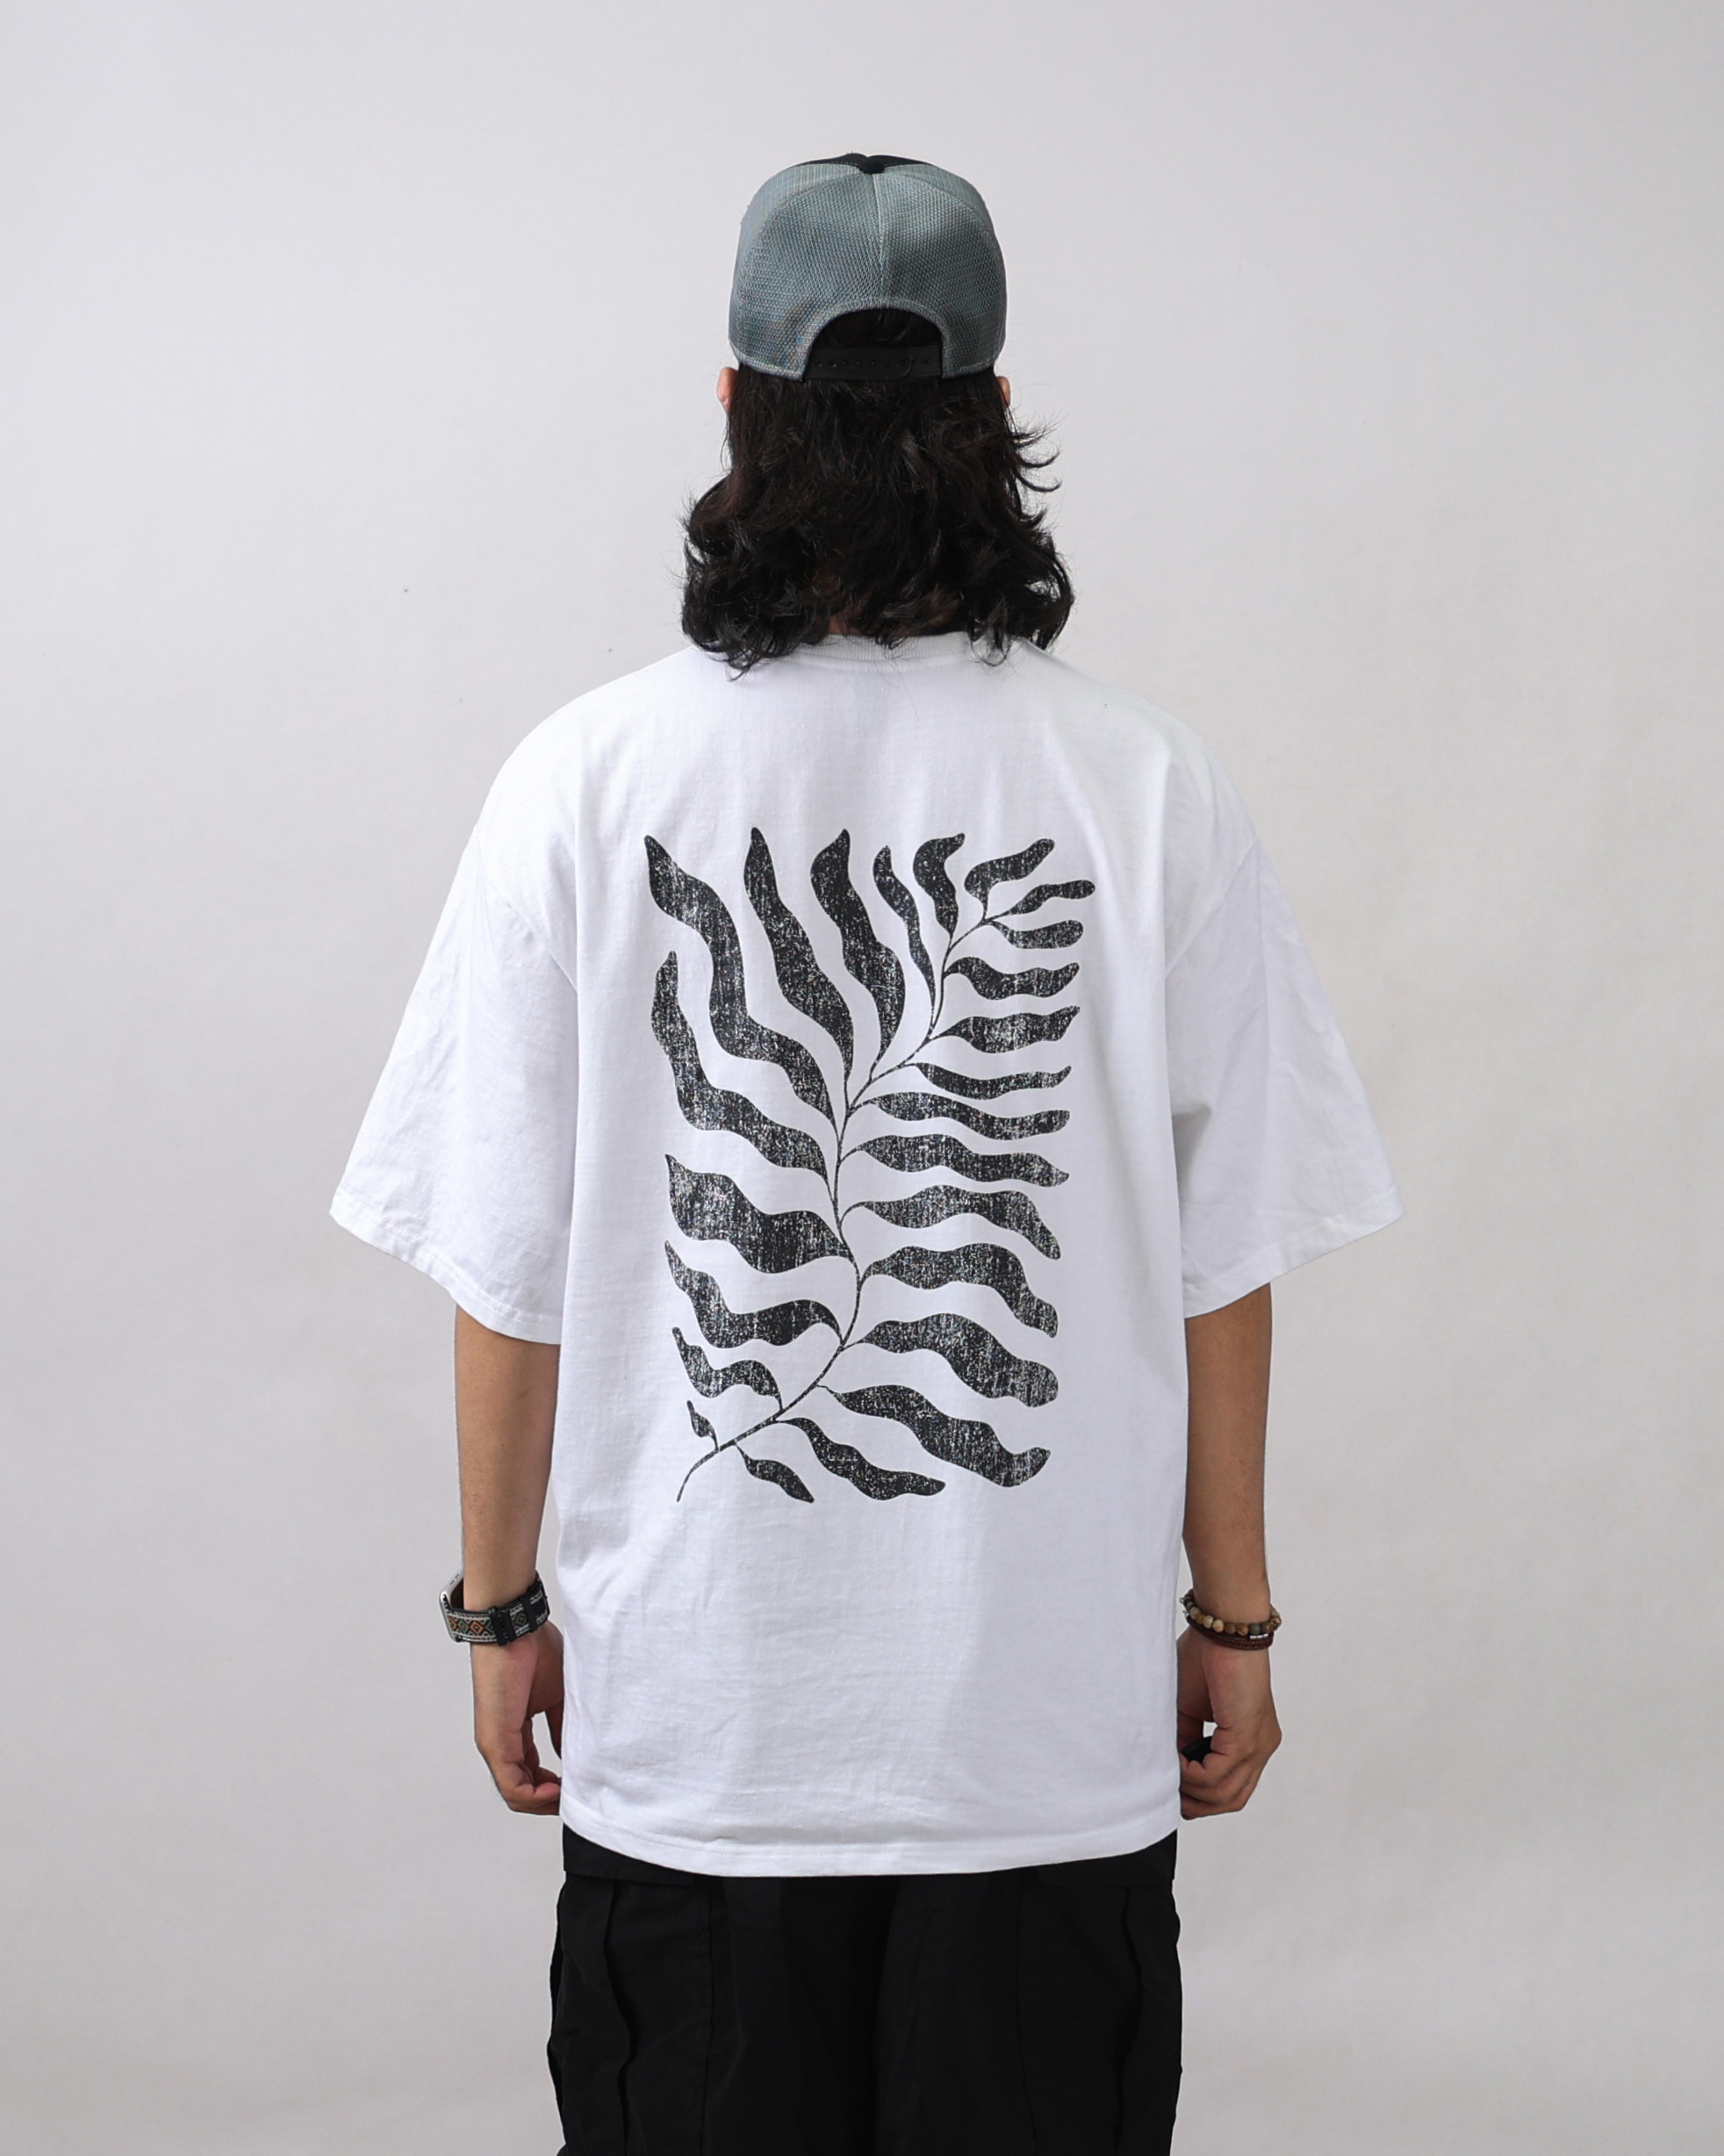 Square Mono Leaf Over T Shirts (Black/Charcoal/White)